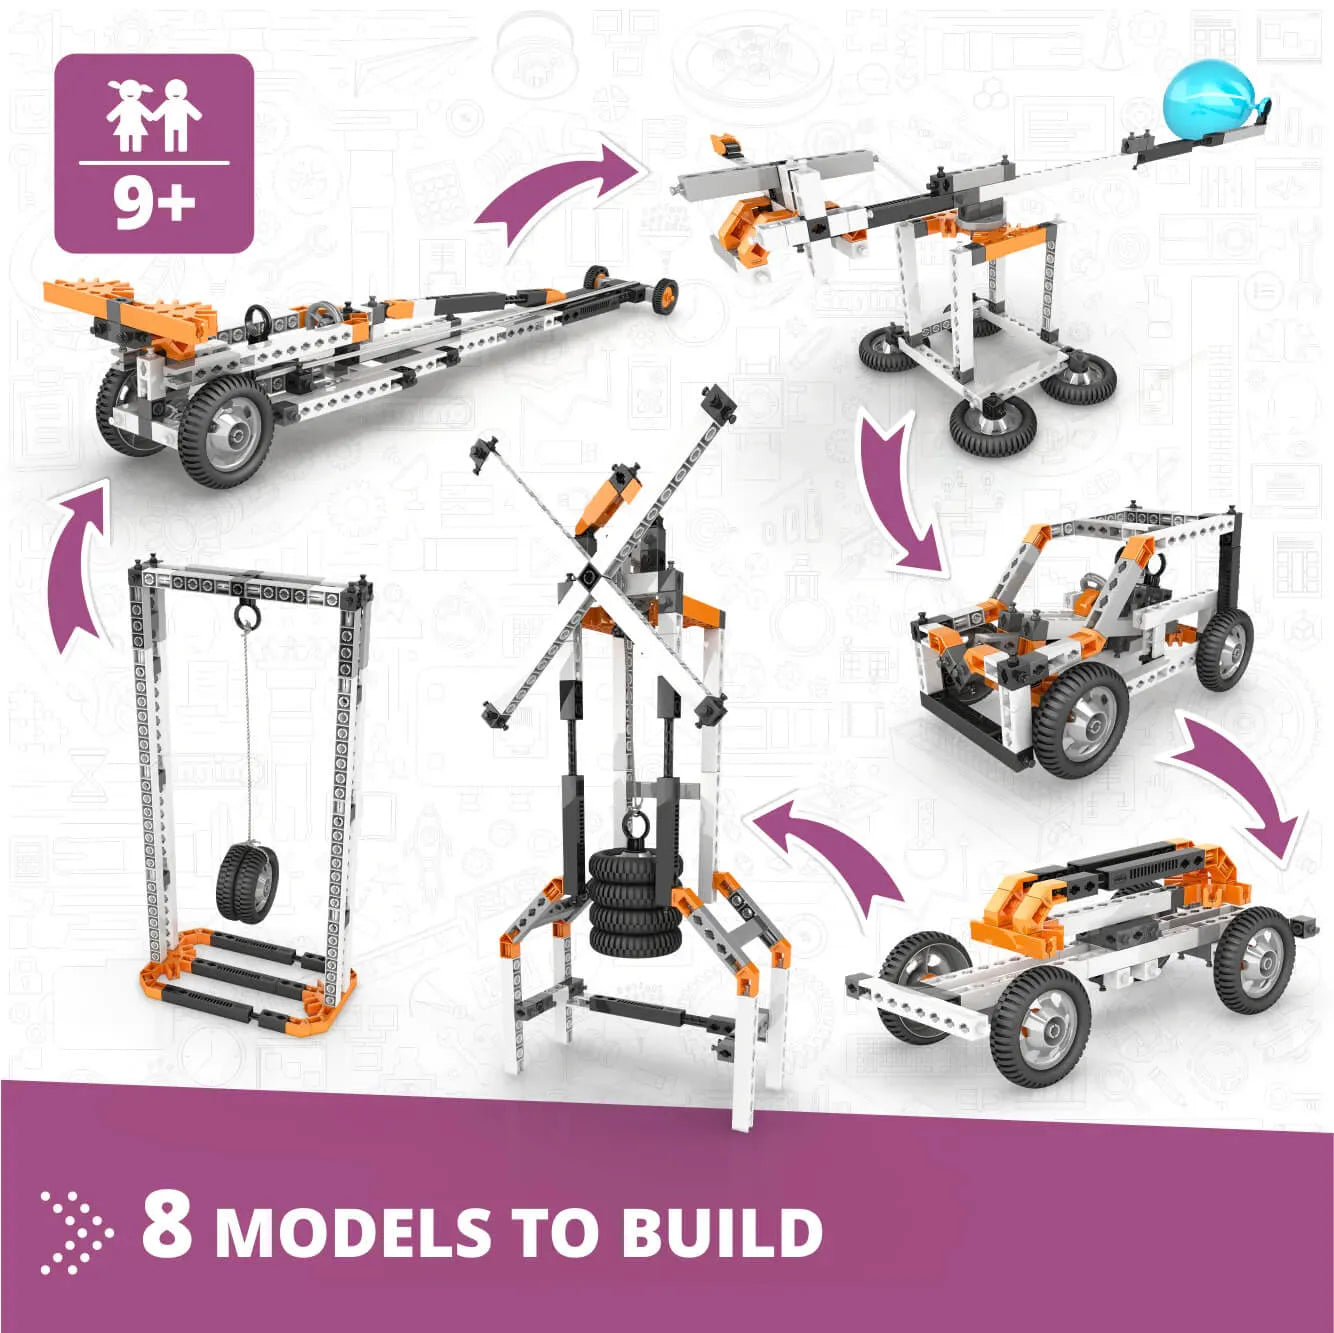 Models of stem construction set - Engino - STEM construction kits